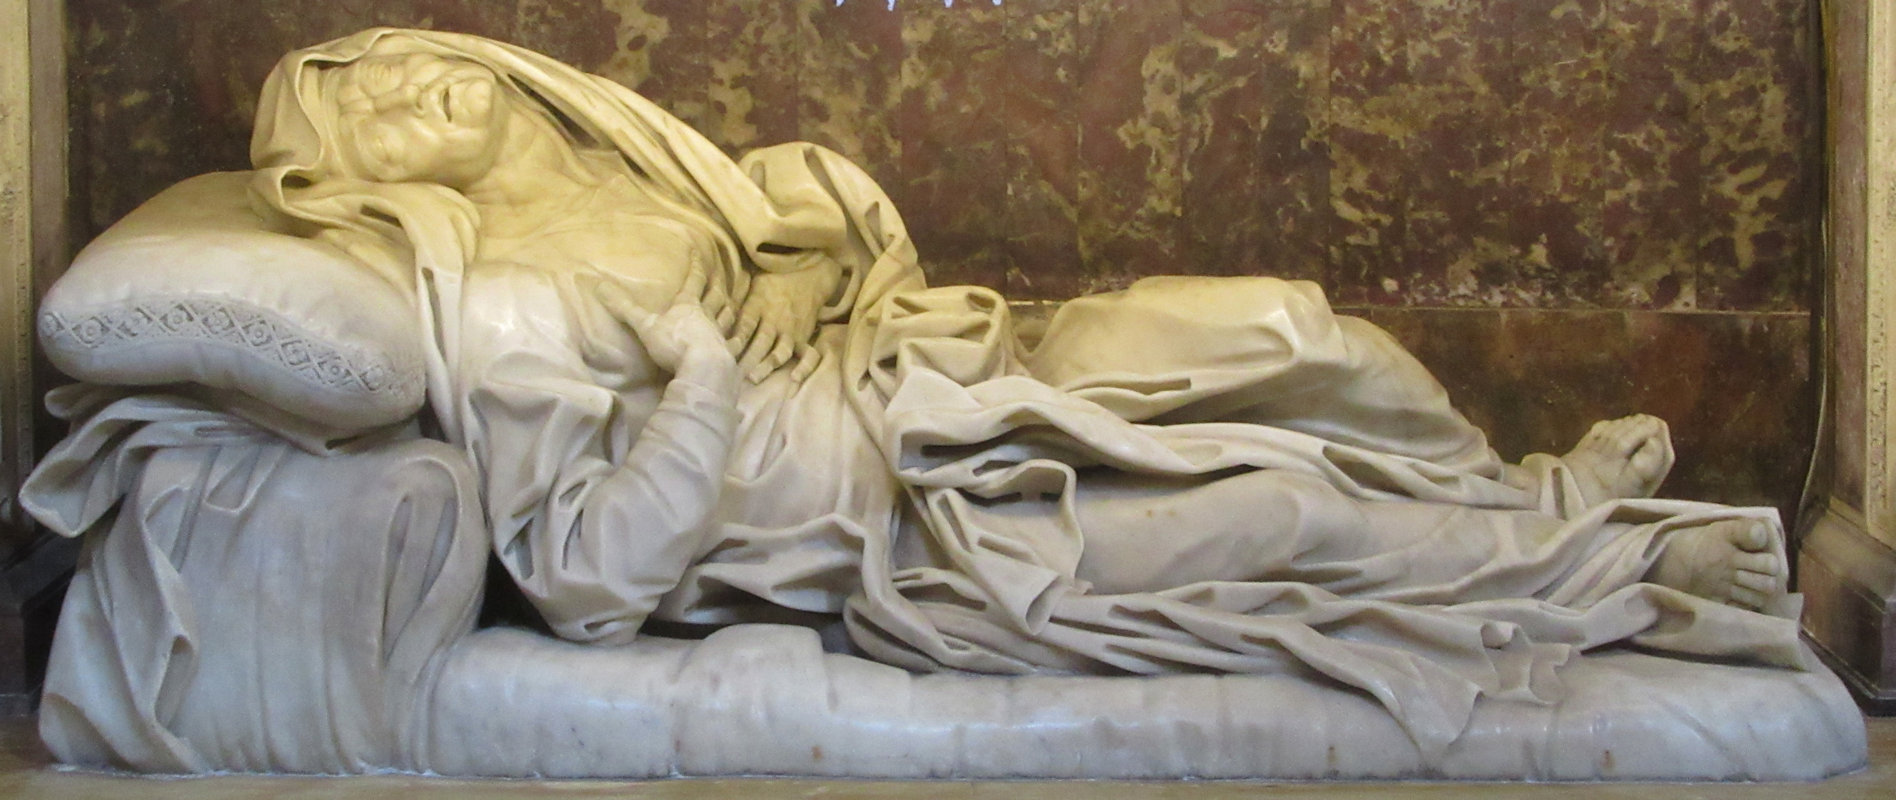 Giovan Battista Maini: Die sterbende Anna, 1750 bis 1752, in der Kirche Sant'Andrea delle Fratte in Rom